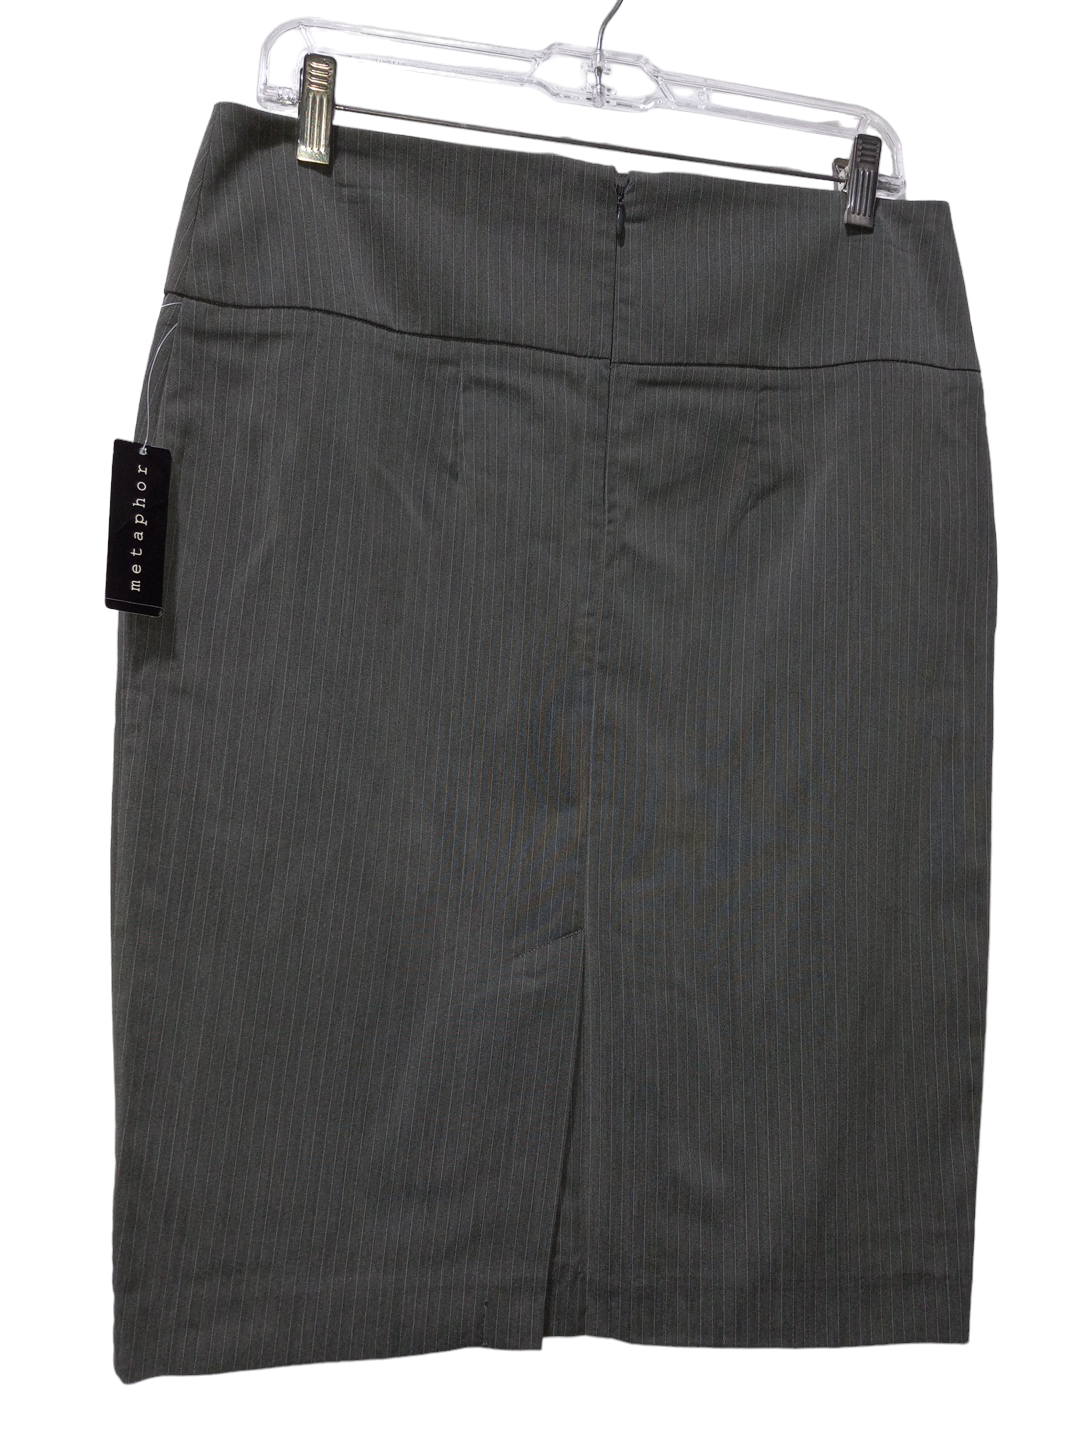 Grey Skirt Midi Metaphor, Size S